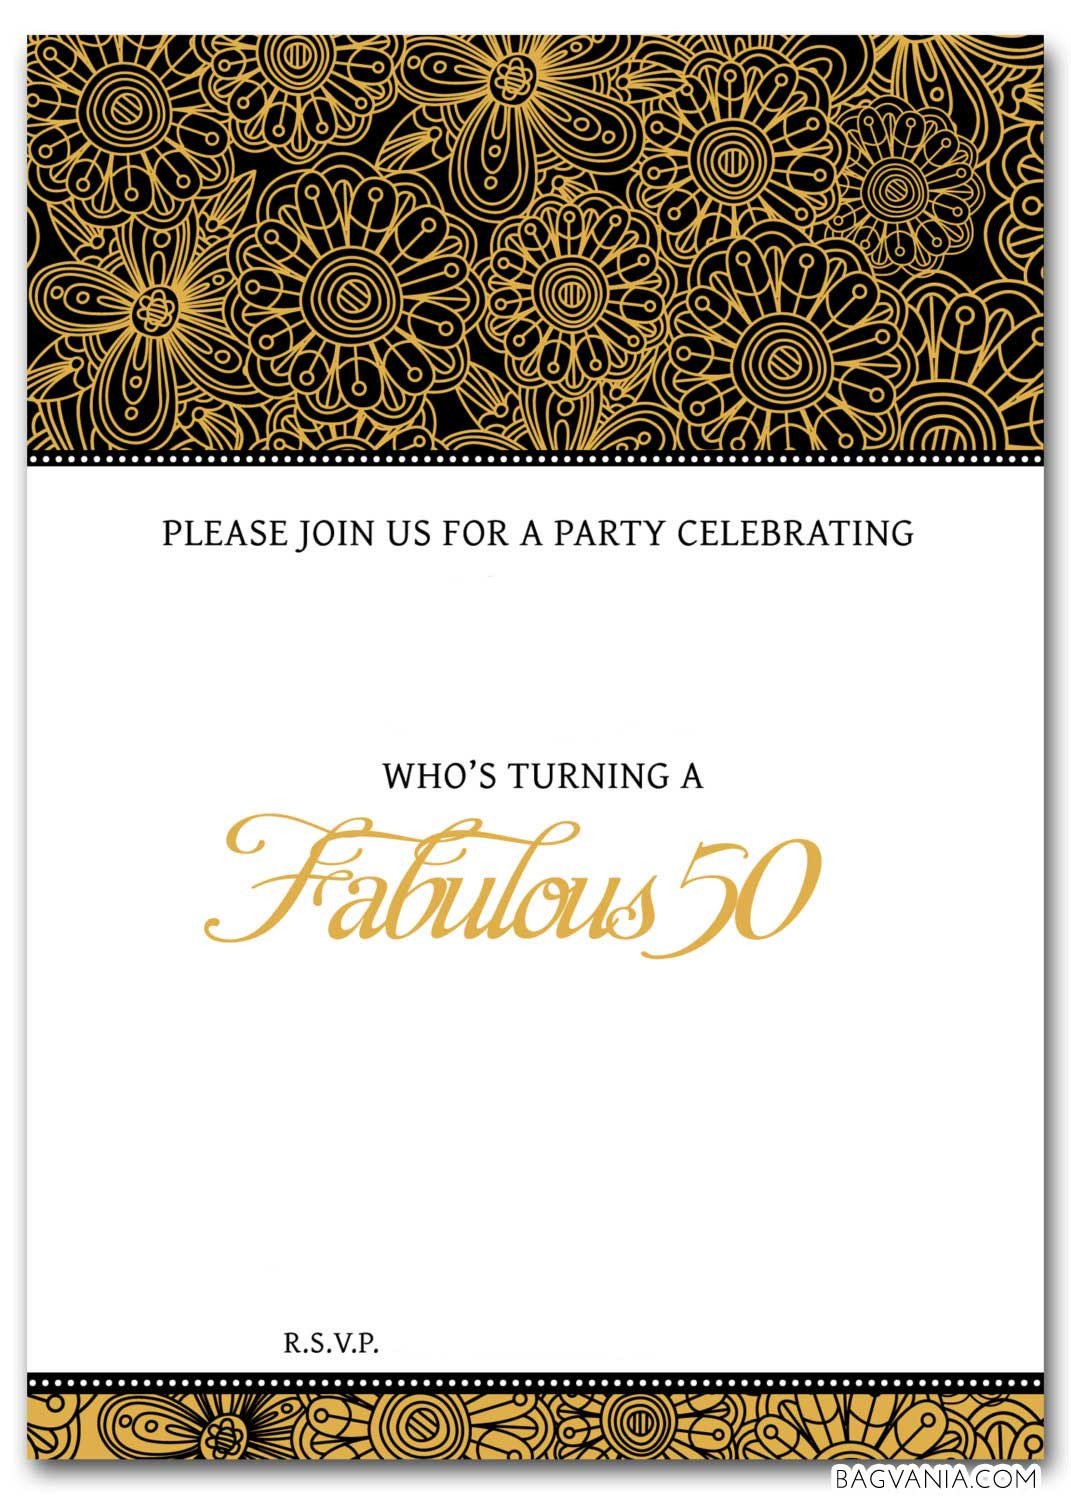 FREE 50th Birthday Party Invitations Wording – FREE